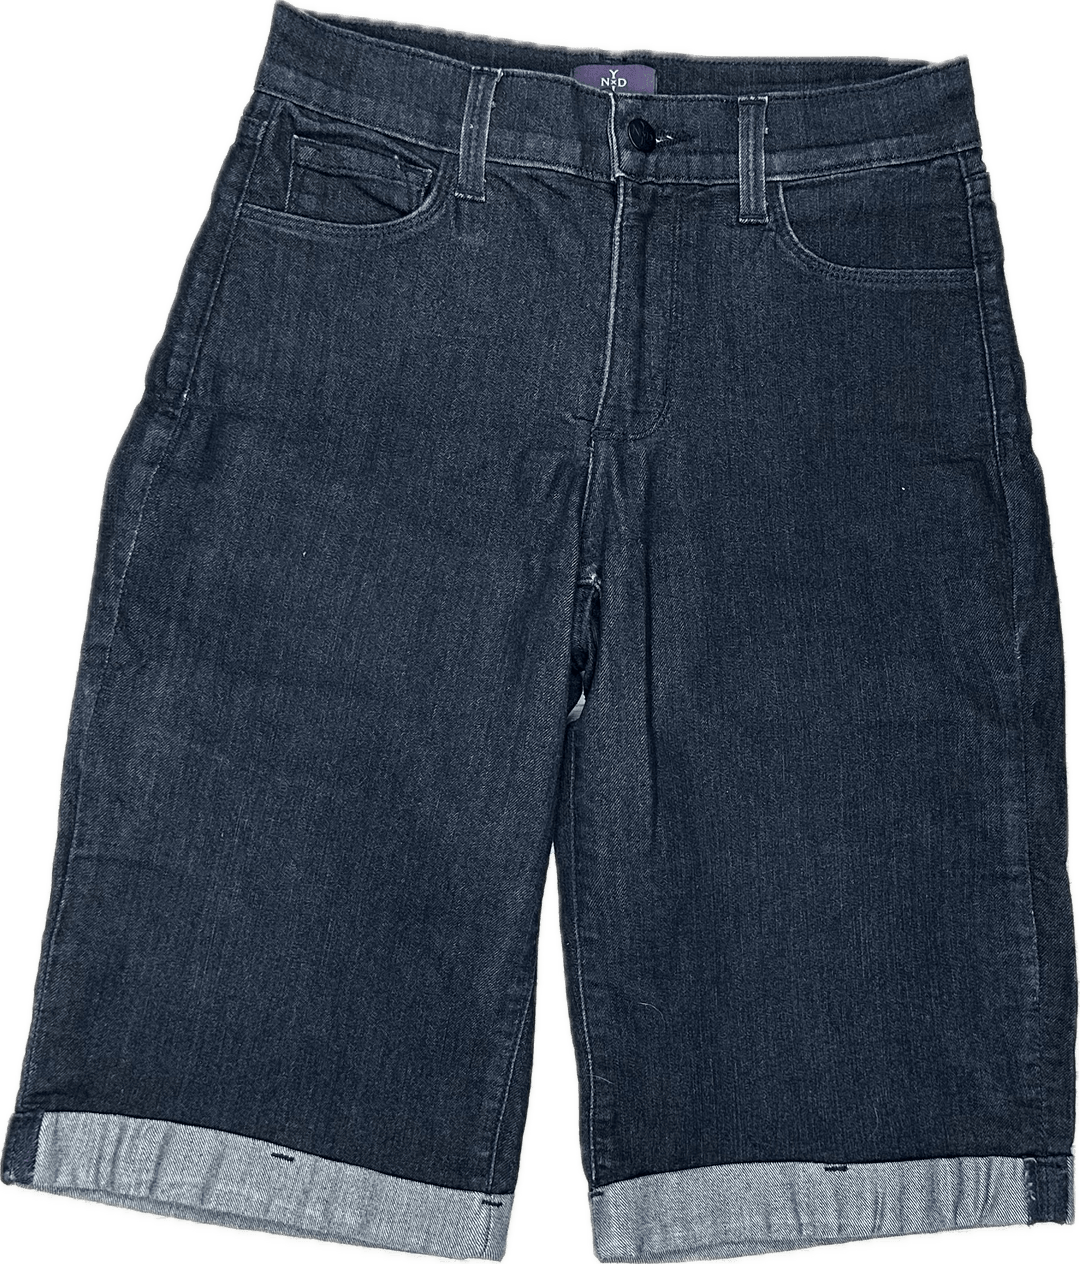 NYDJ - Lift & Tuck Blue Long Cuffed Shorts -Size 0US suit 6AU - Jean Pool